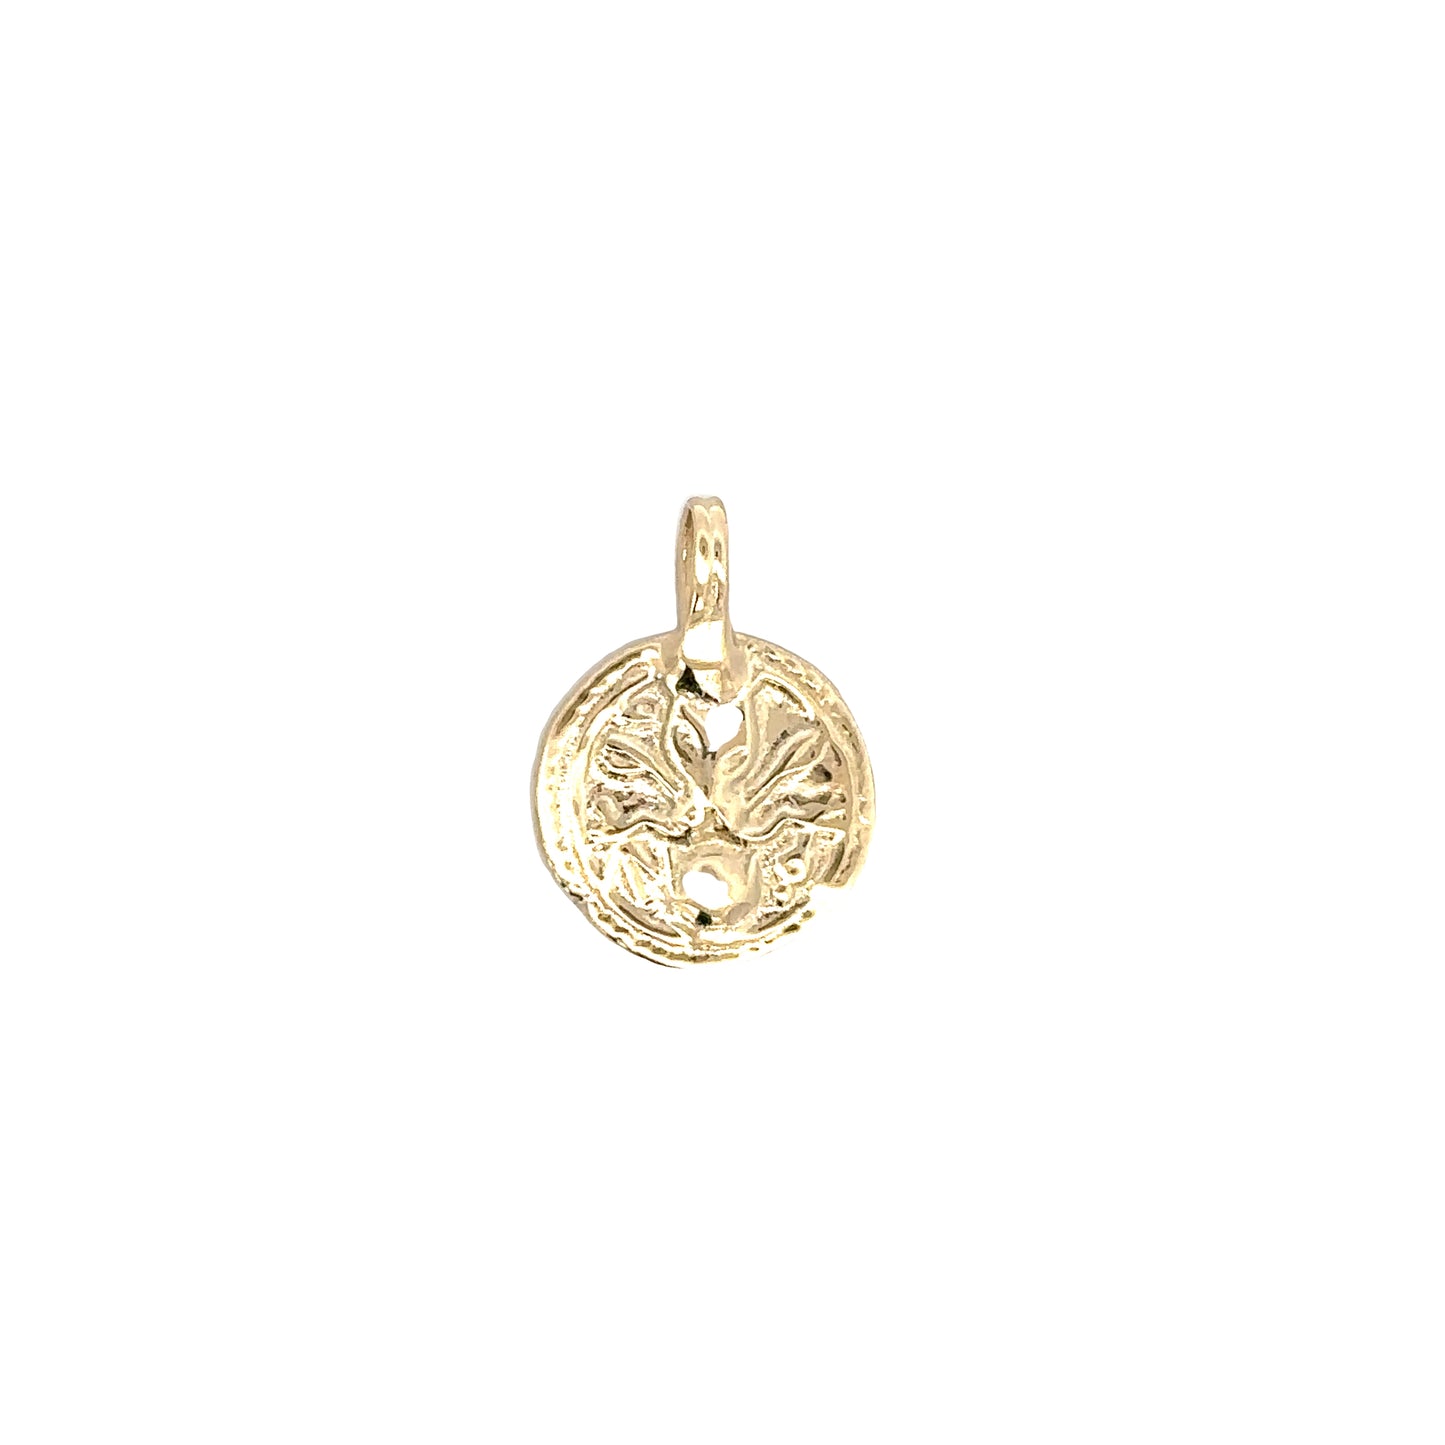 shannon len / shiva round pendant